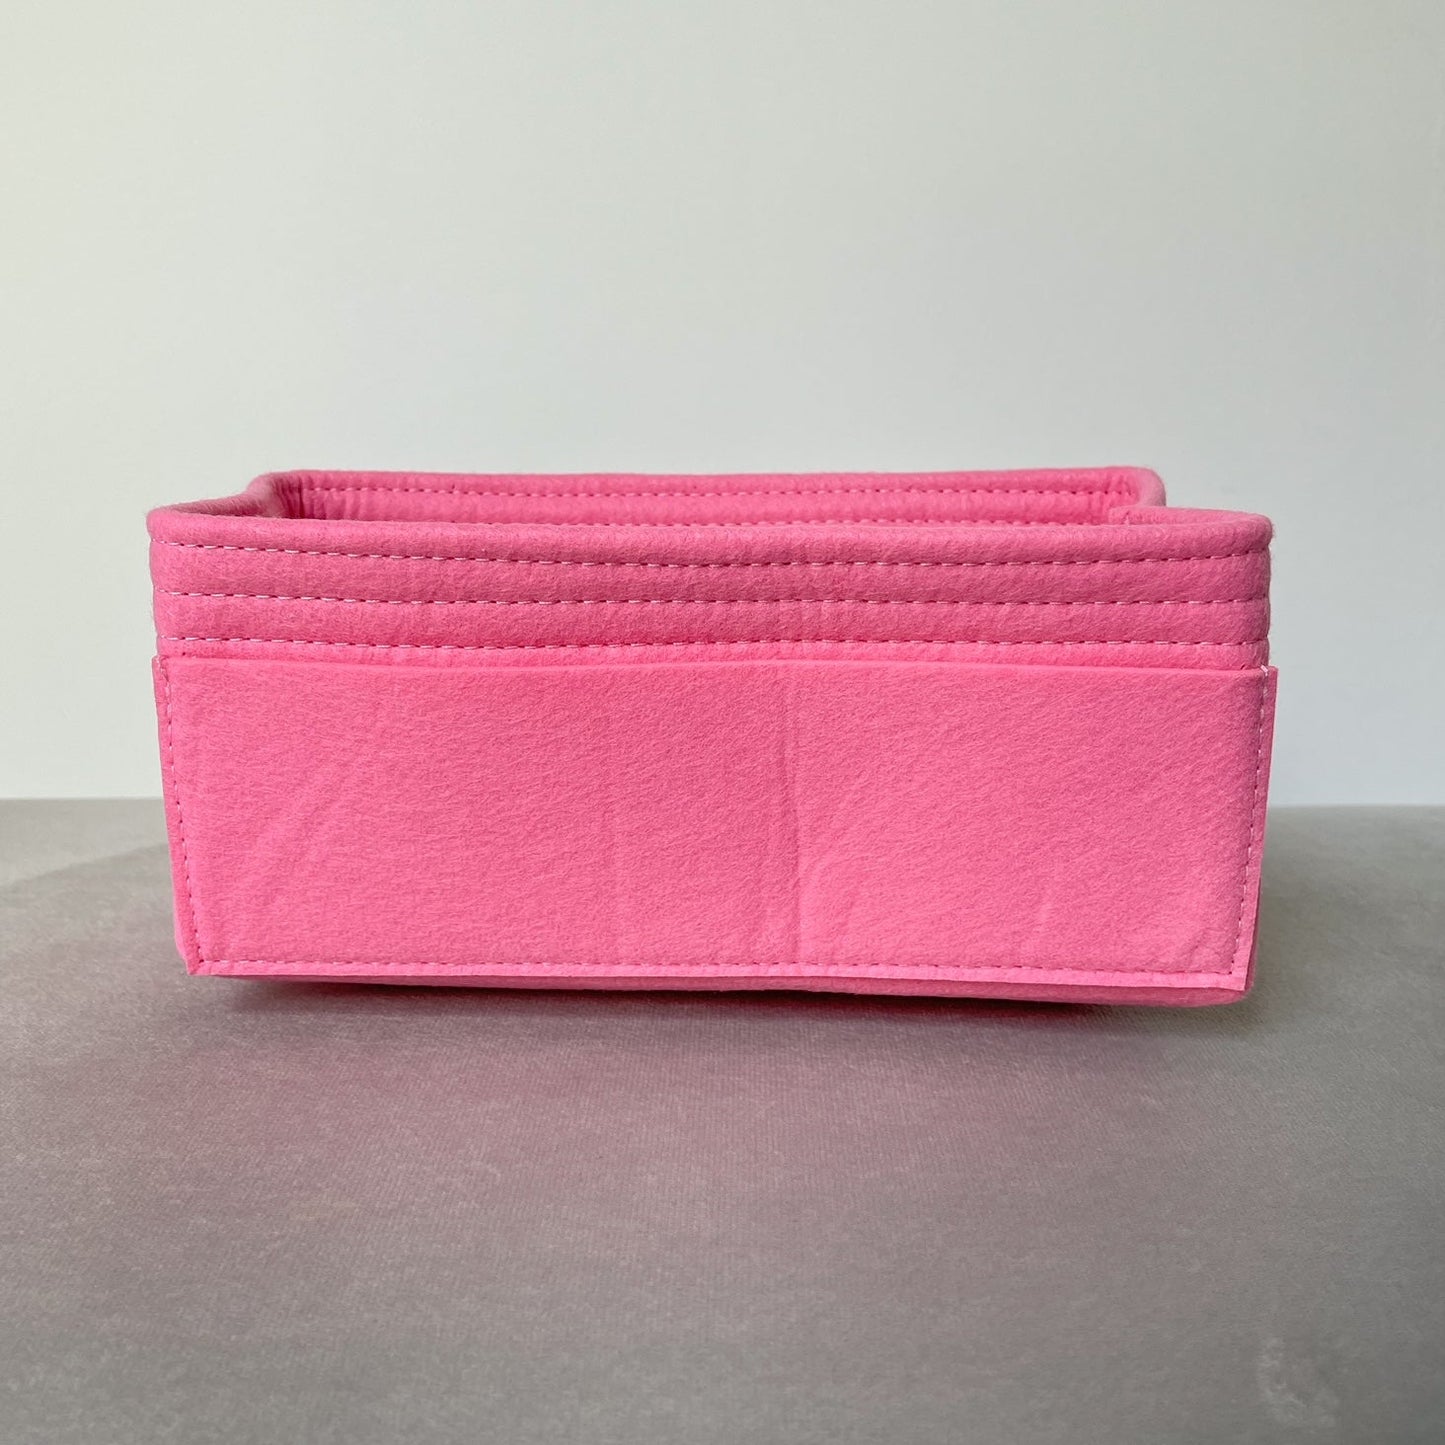 Kelly Bag Caddy in Pink